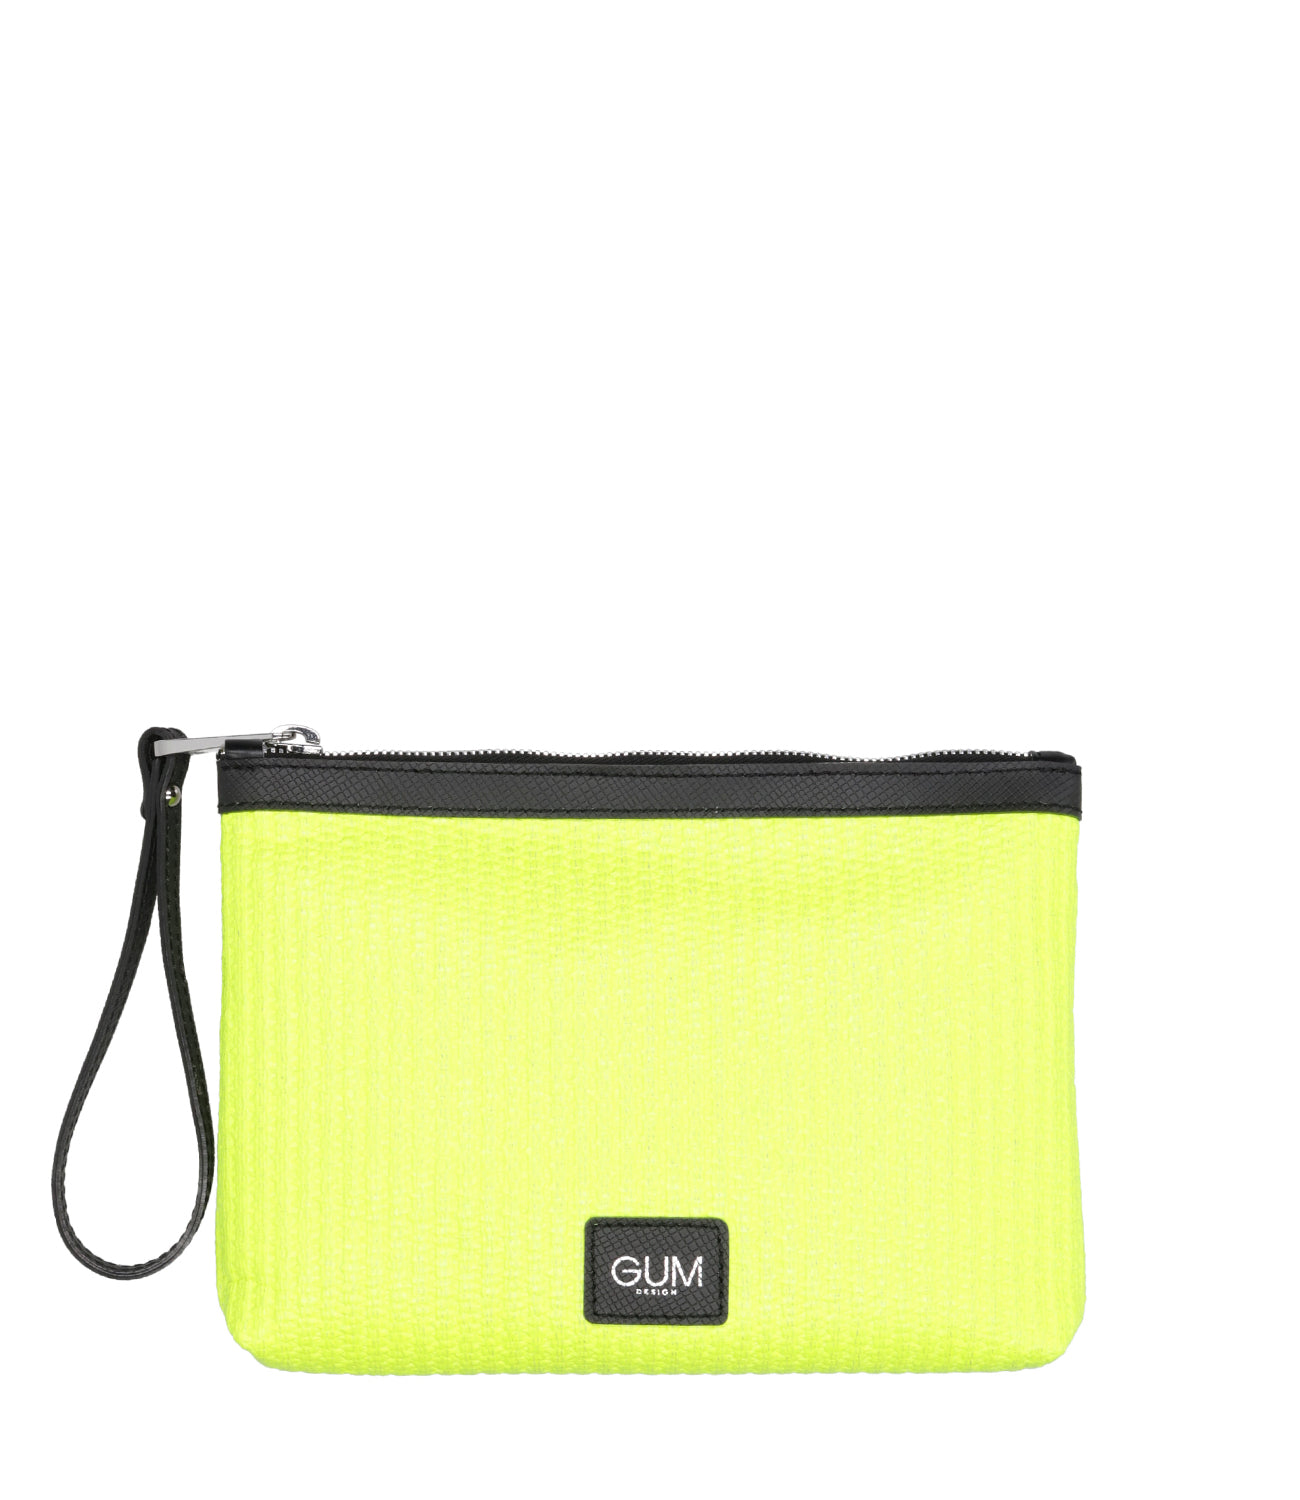 Gum design | Fluo yellow clutch bag